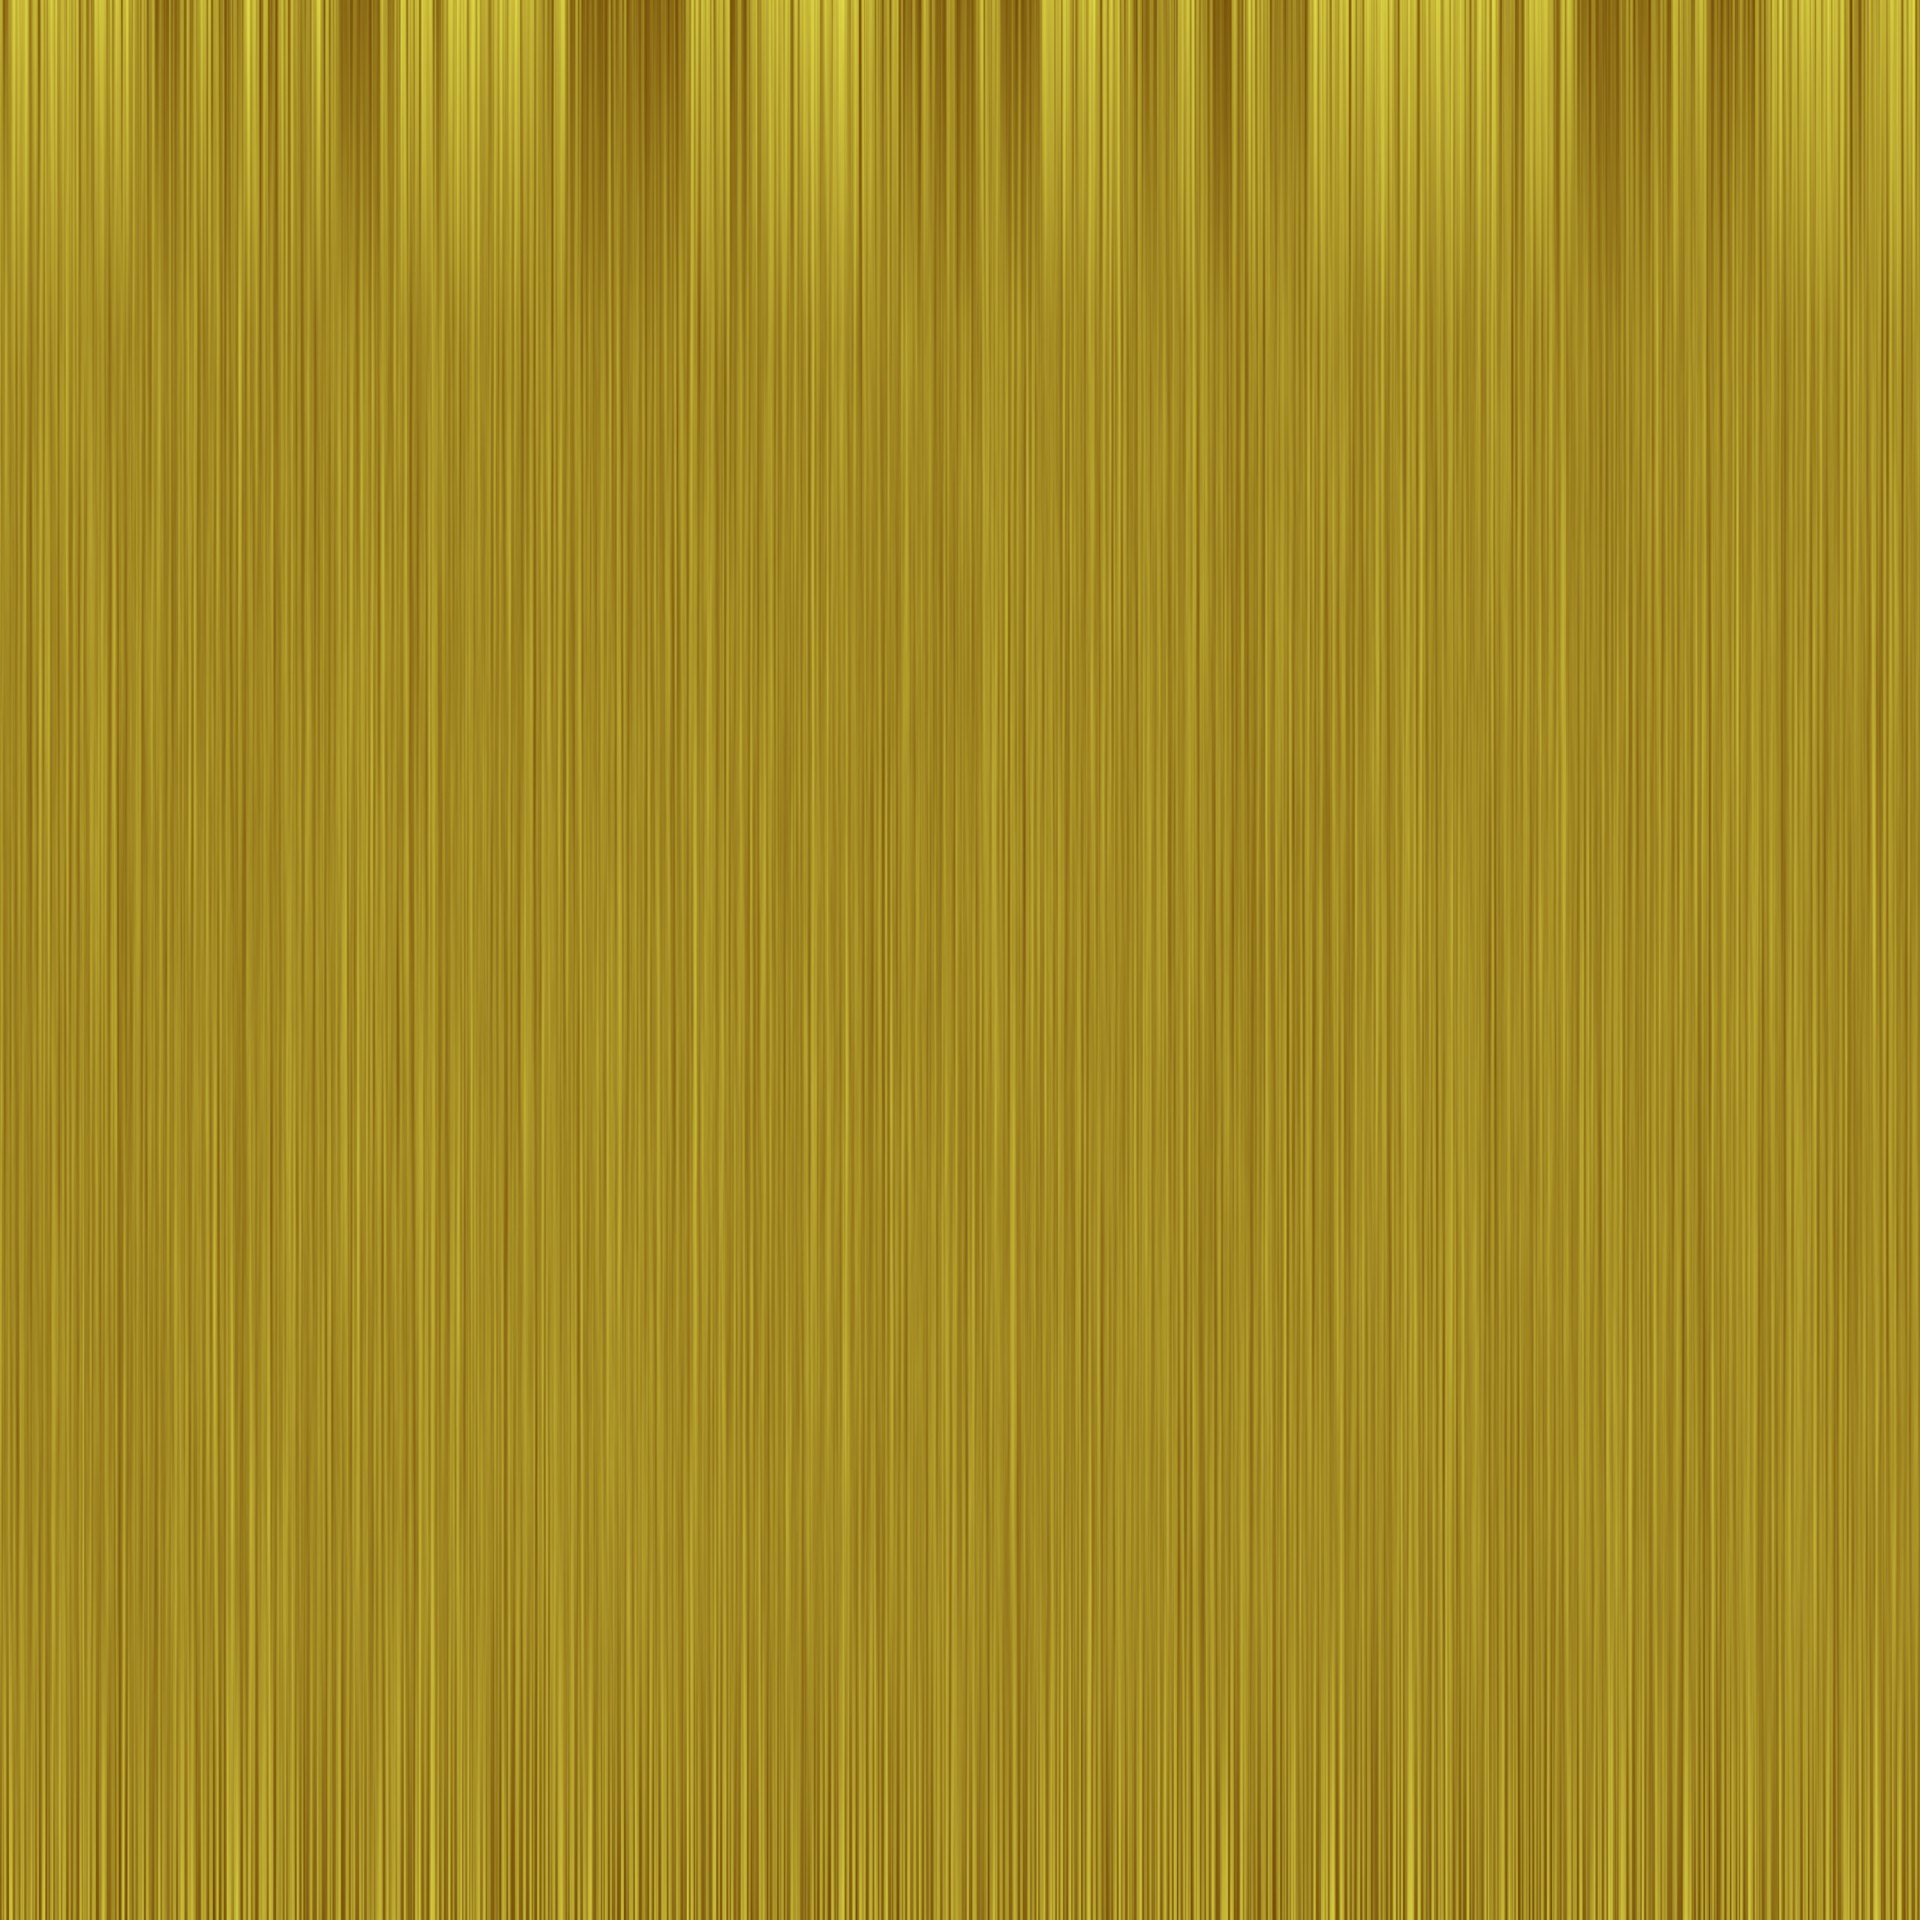 Gold line texture photo